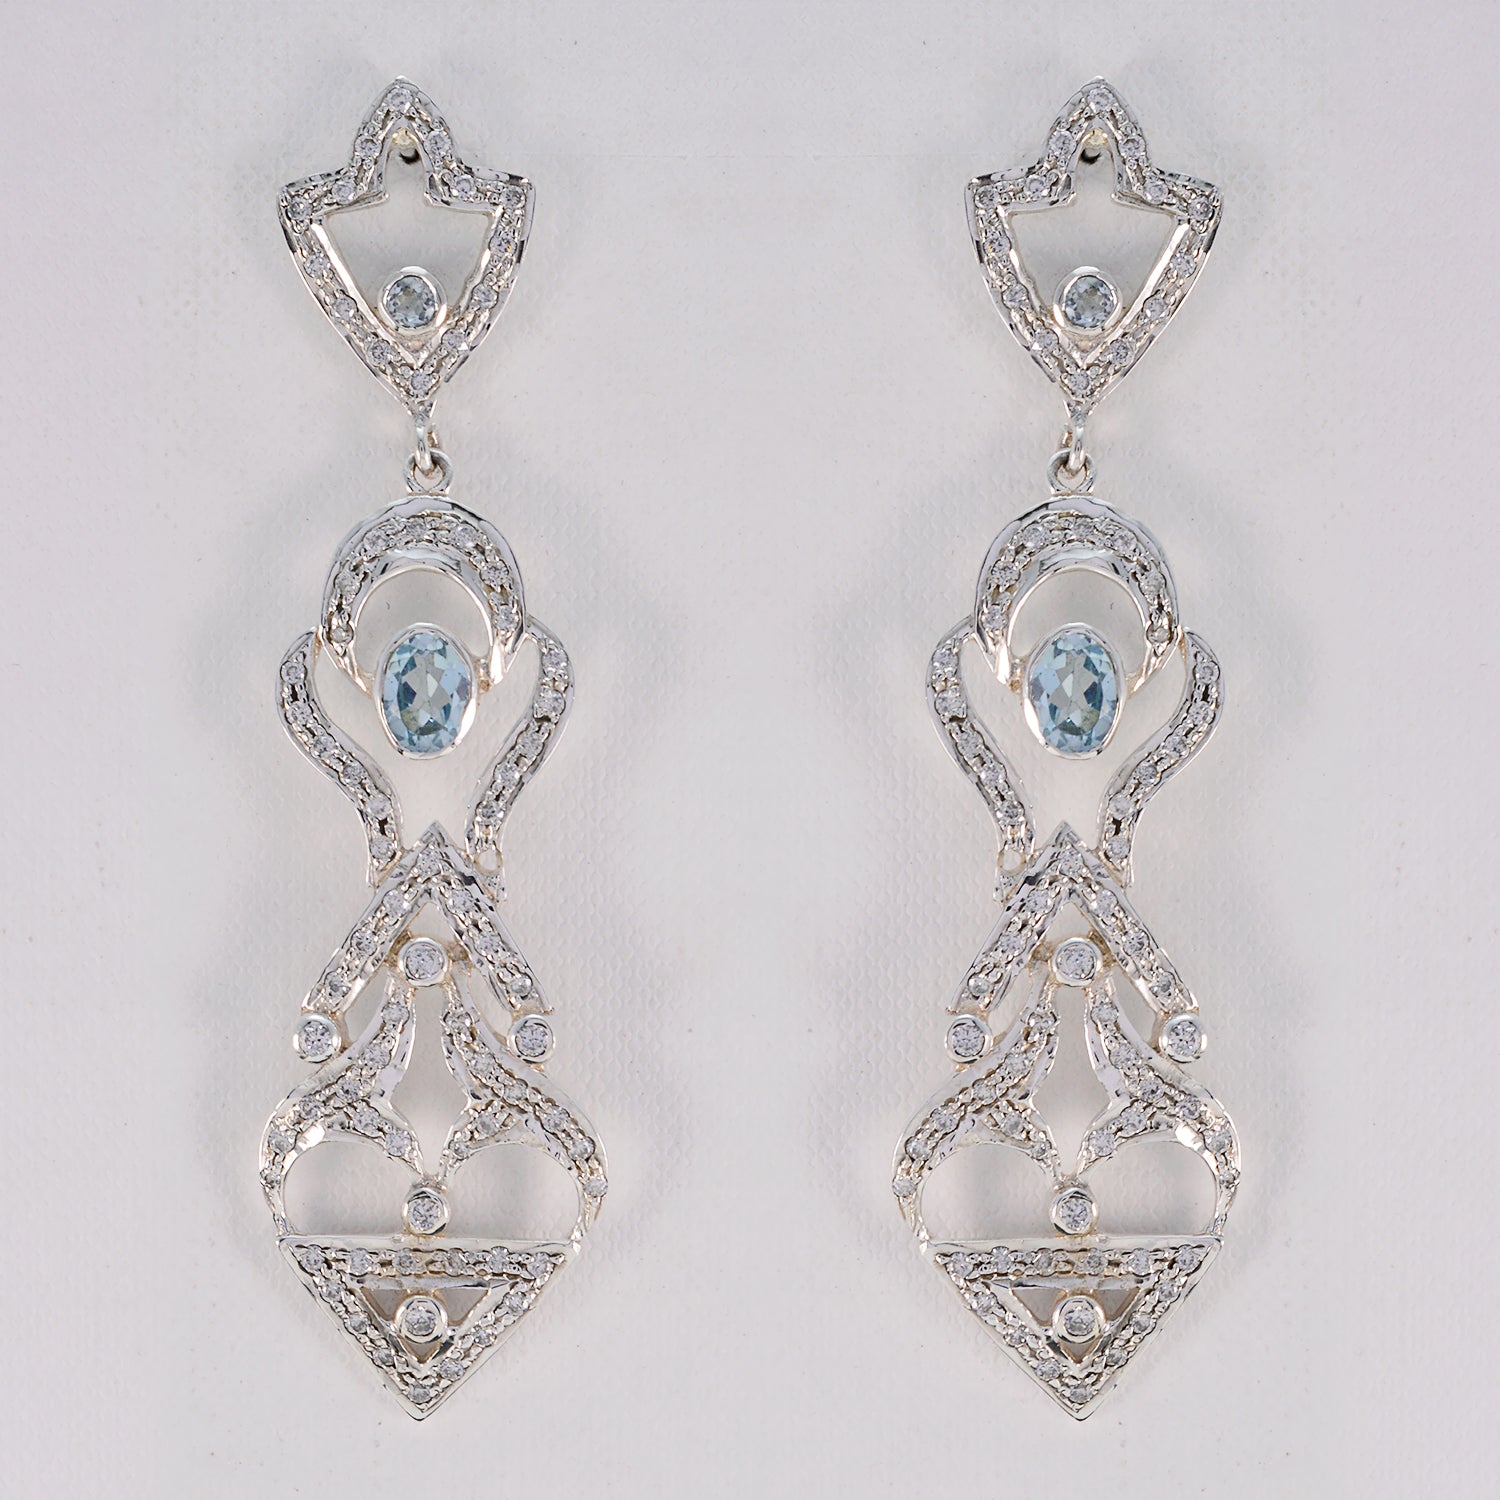 Riyo Good Gemstones multi shape Faceted Blue Topaz Silver Earring gift for christmas day